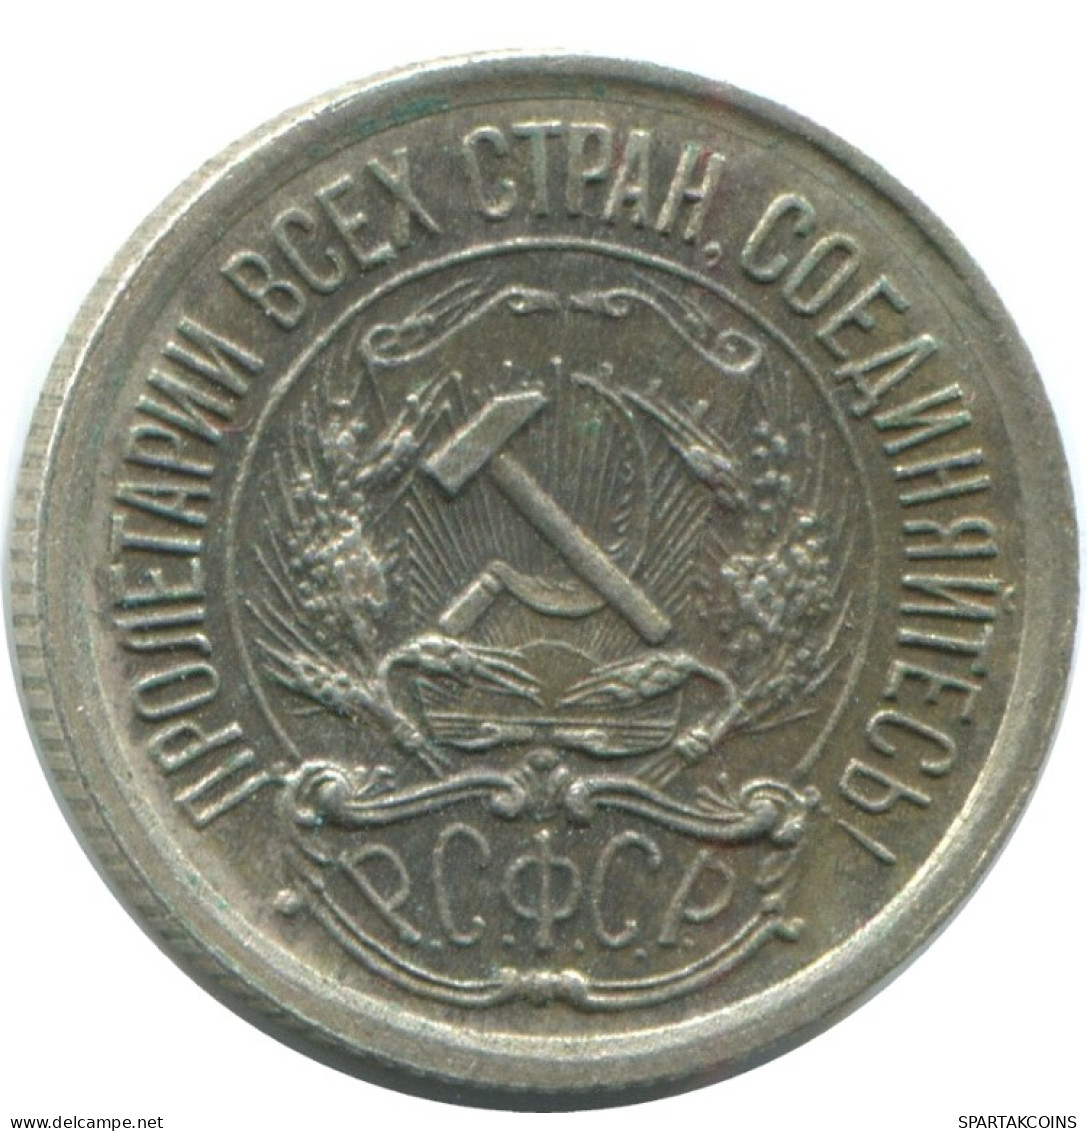 10 KOPEKS 1923 RUSSIA RSFSR SILVER Coin HIGH GRADE #AF002.4.U.A - Rusia